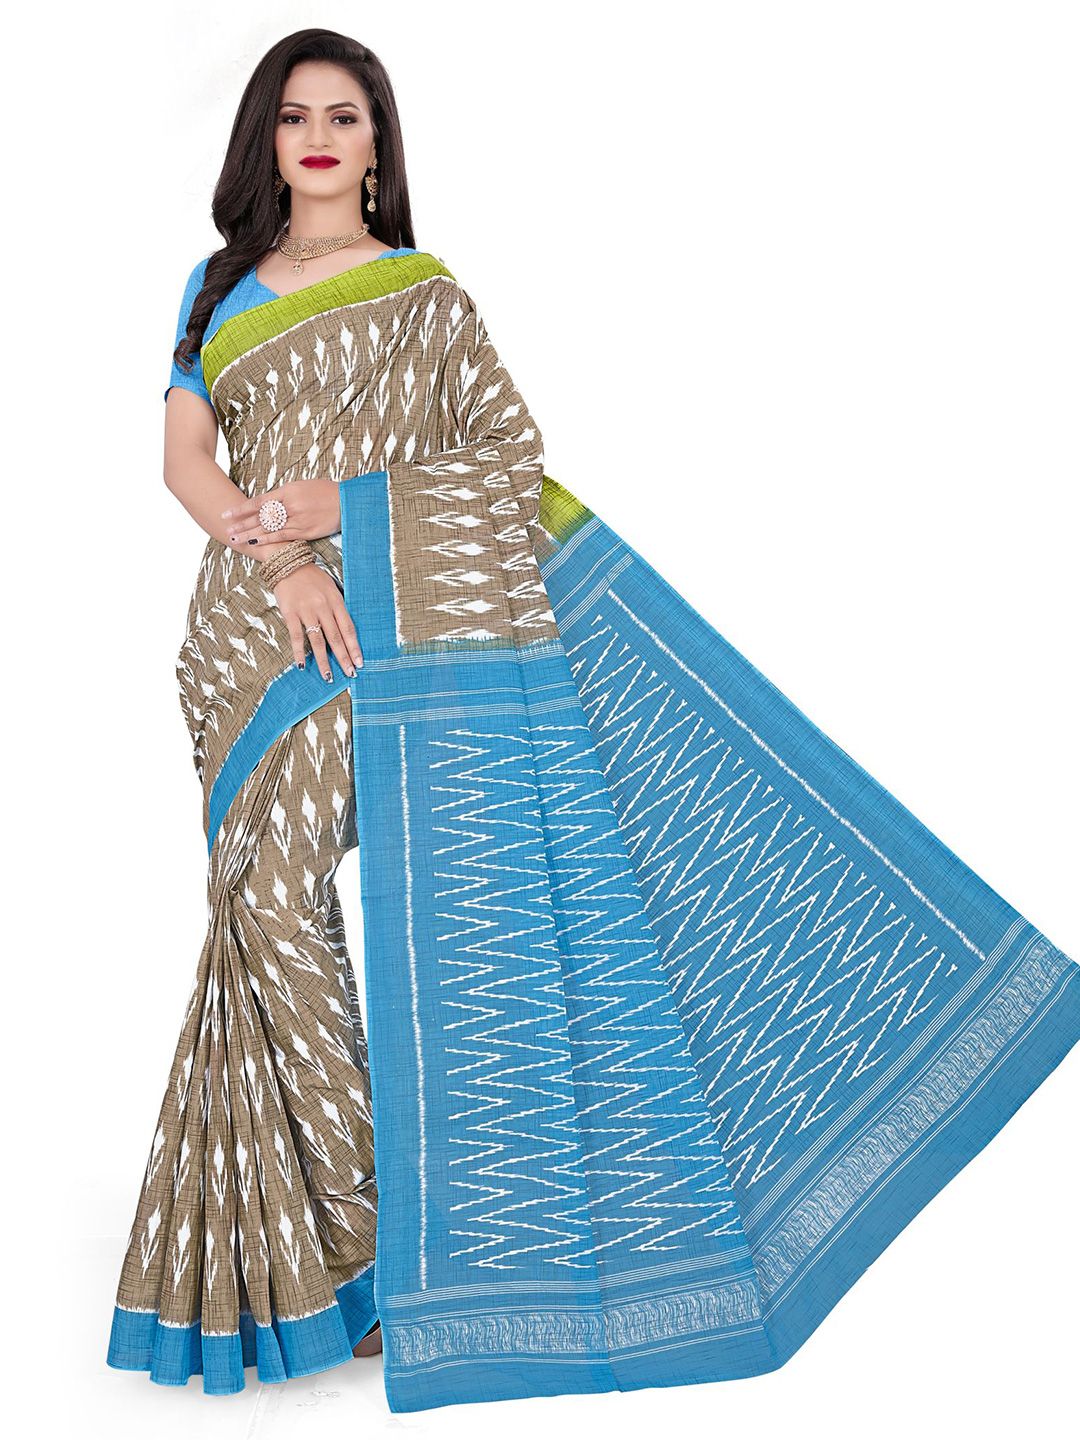 SHANVIKA Beige & Green Ethnic Motifs Pure Cotton Ready to Wear Saree Price in India